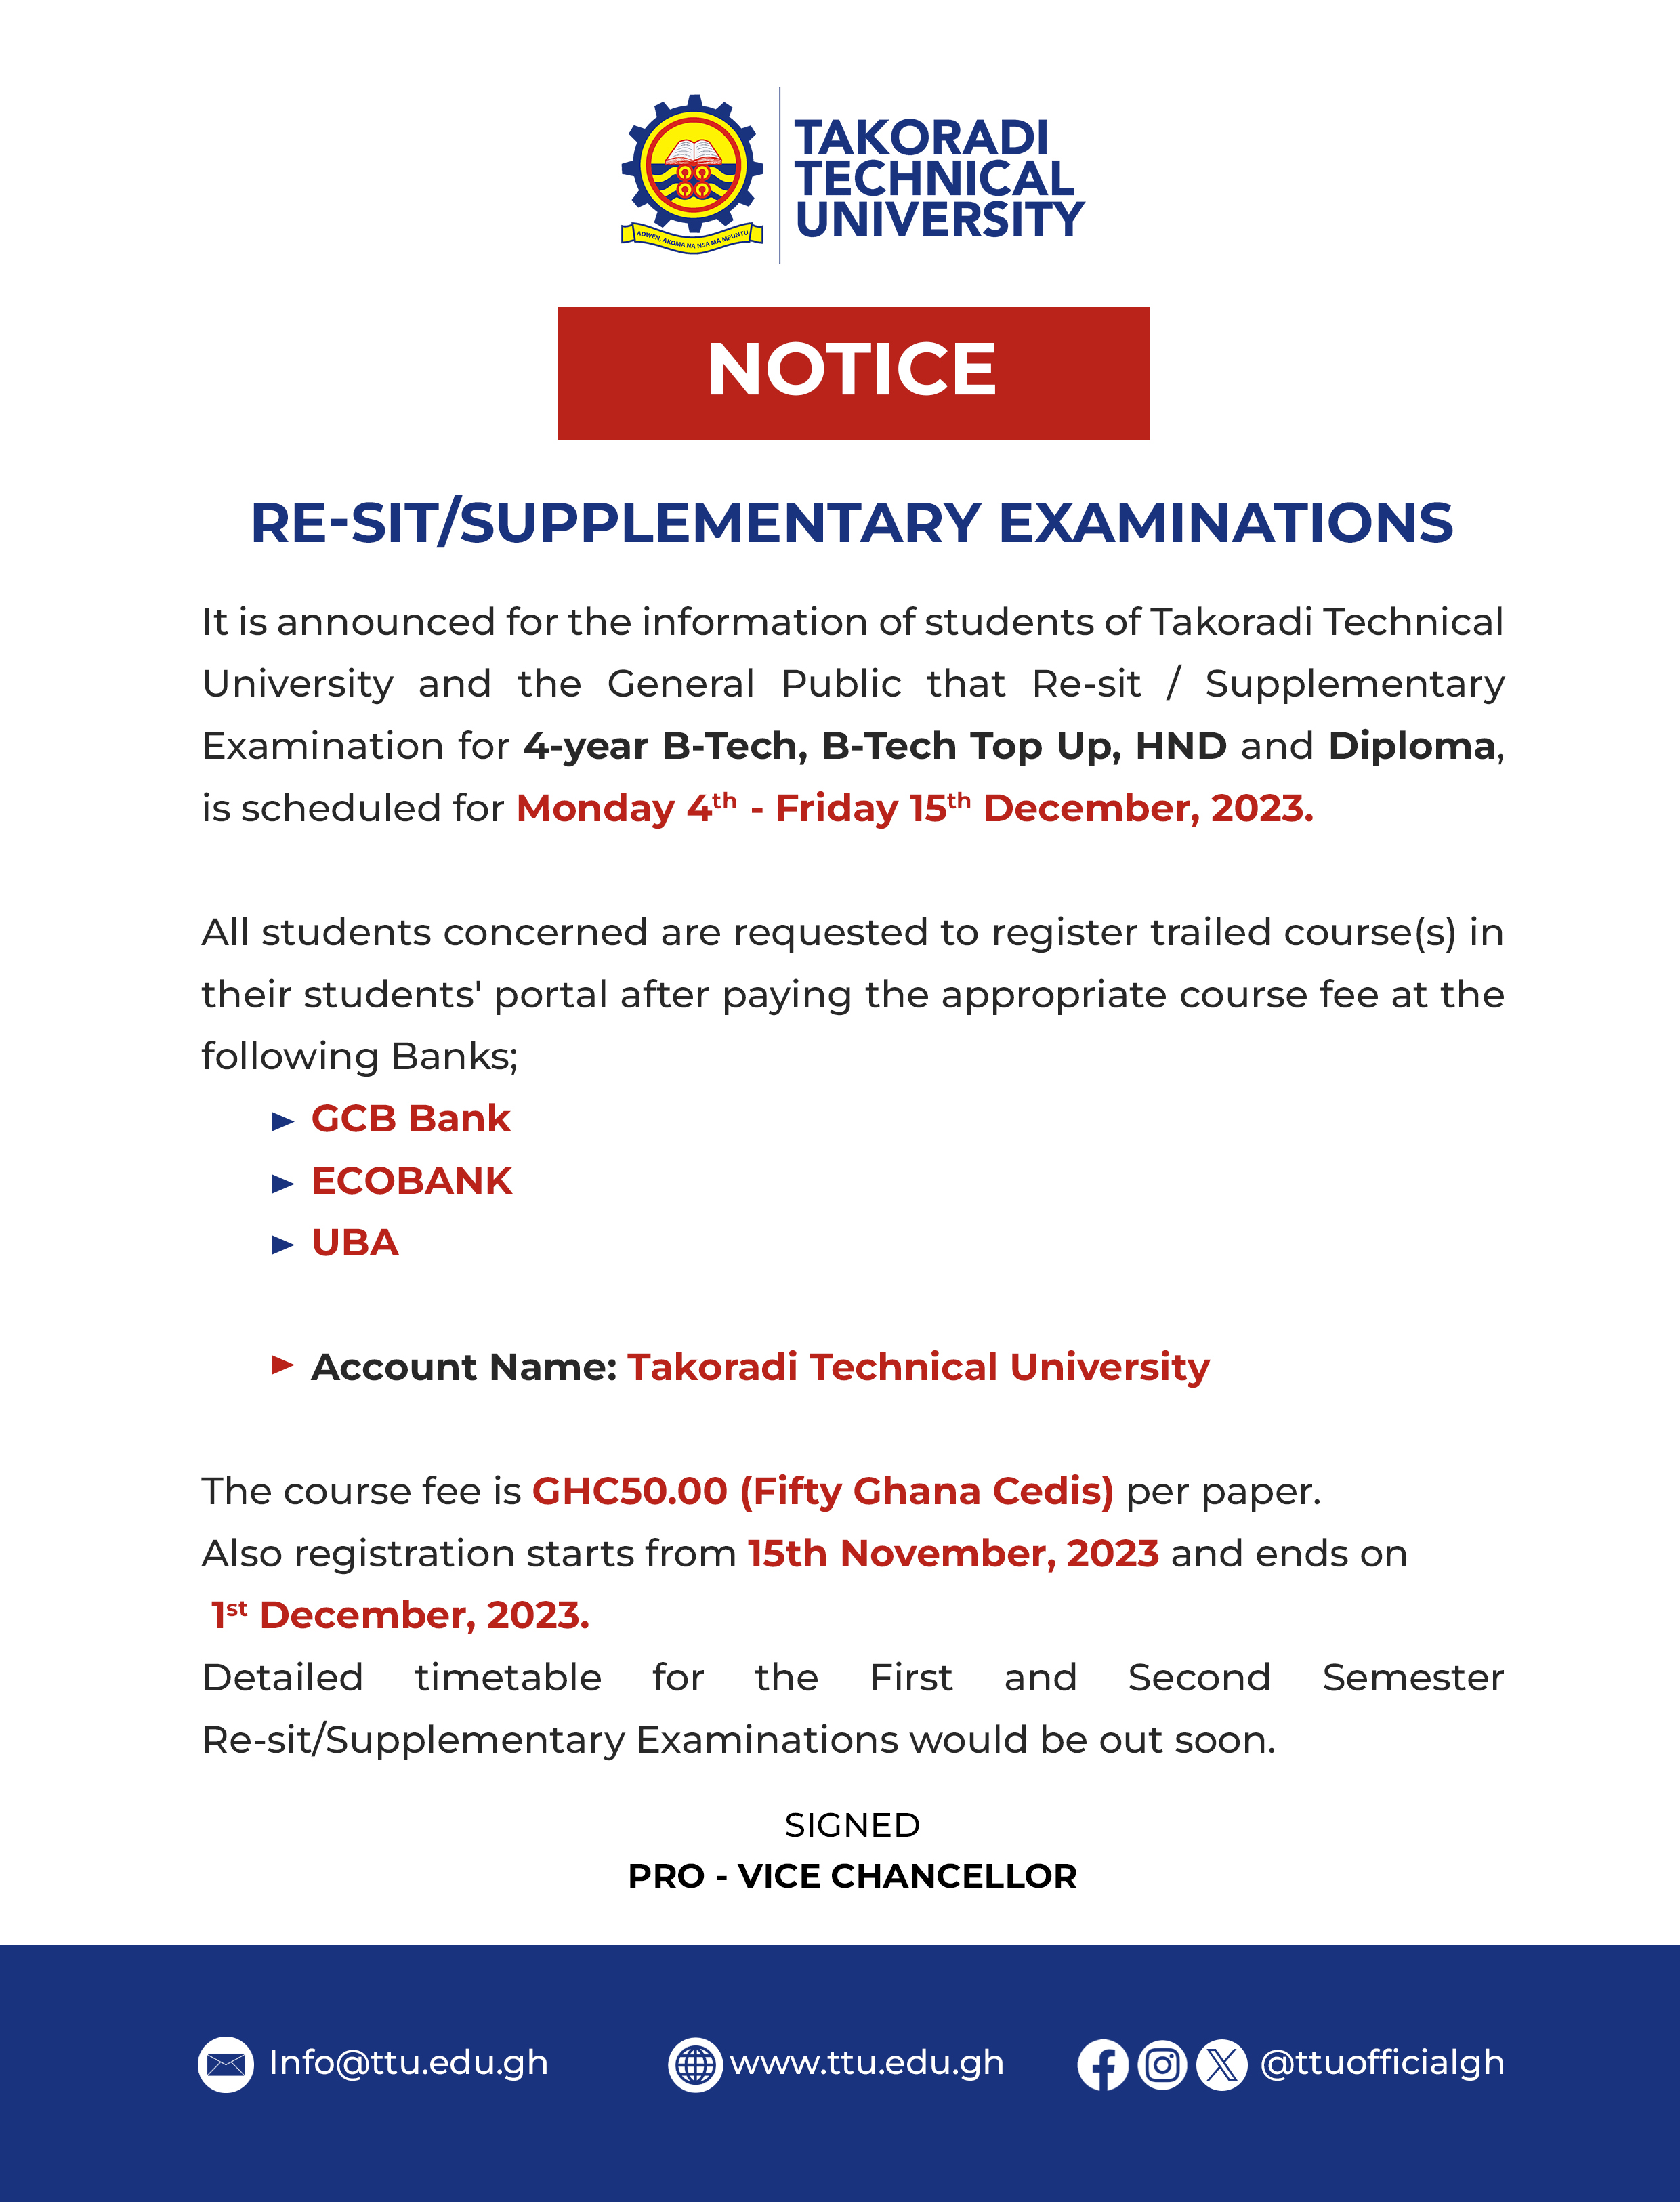 Registration for re-sit examinations - Takoradi Technical University